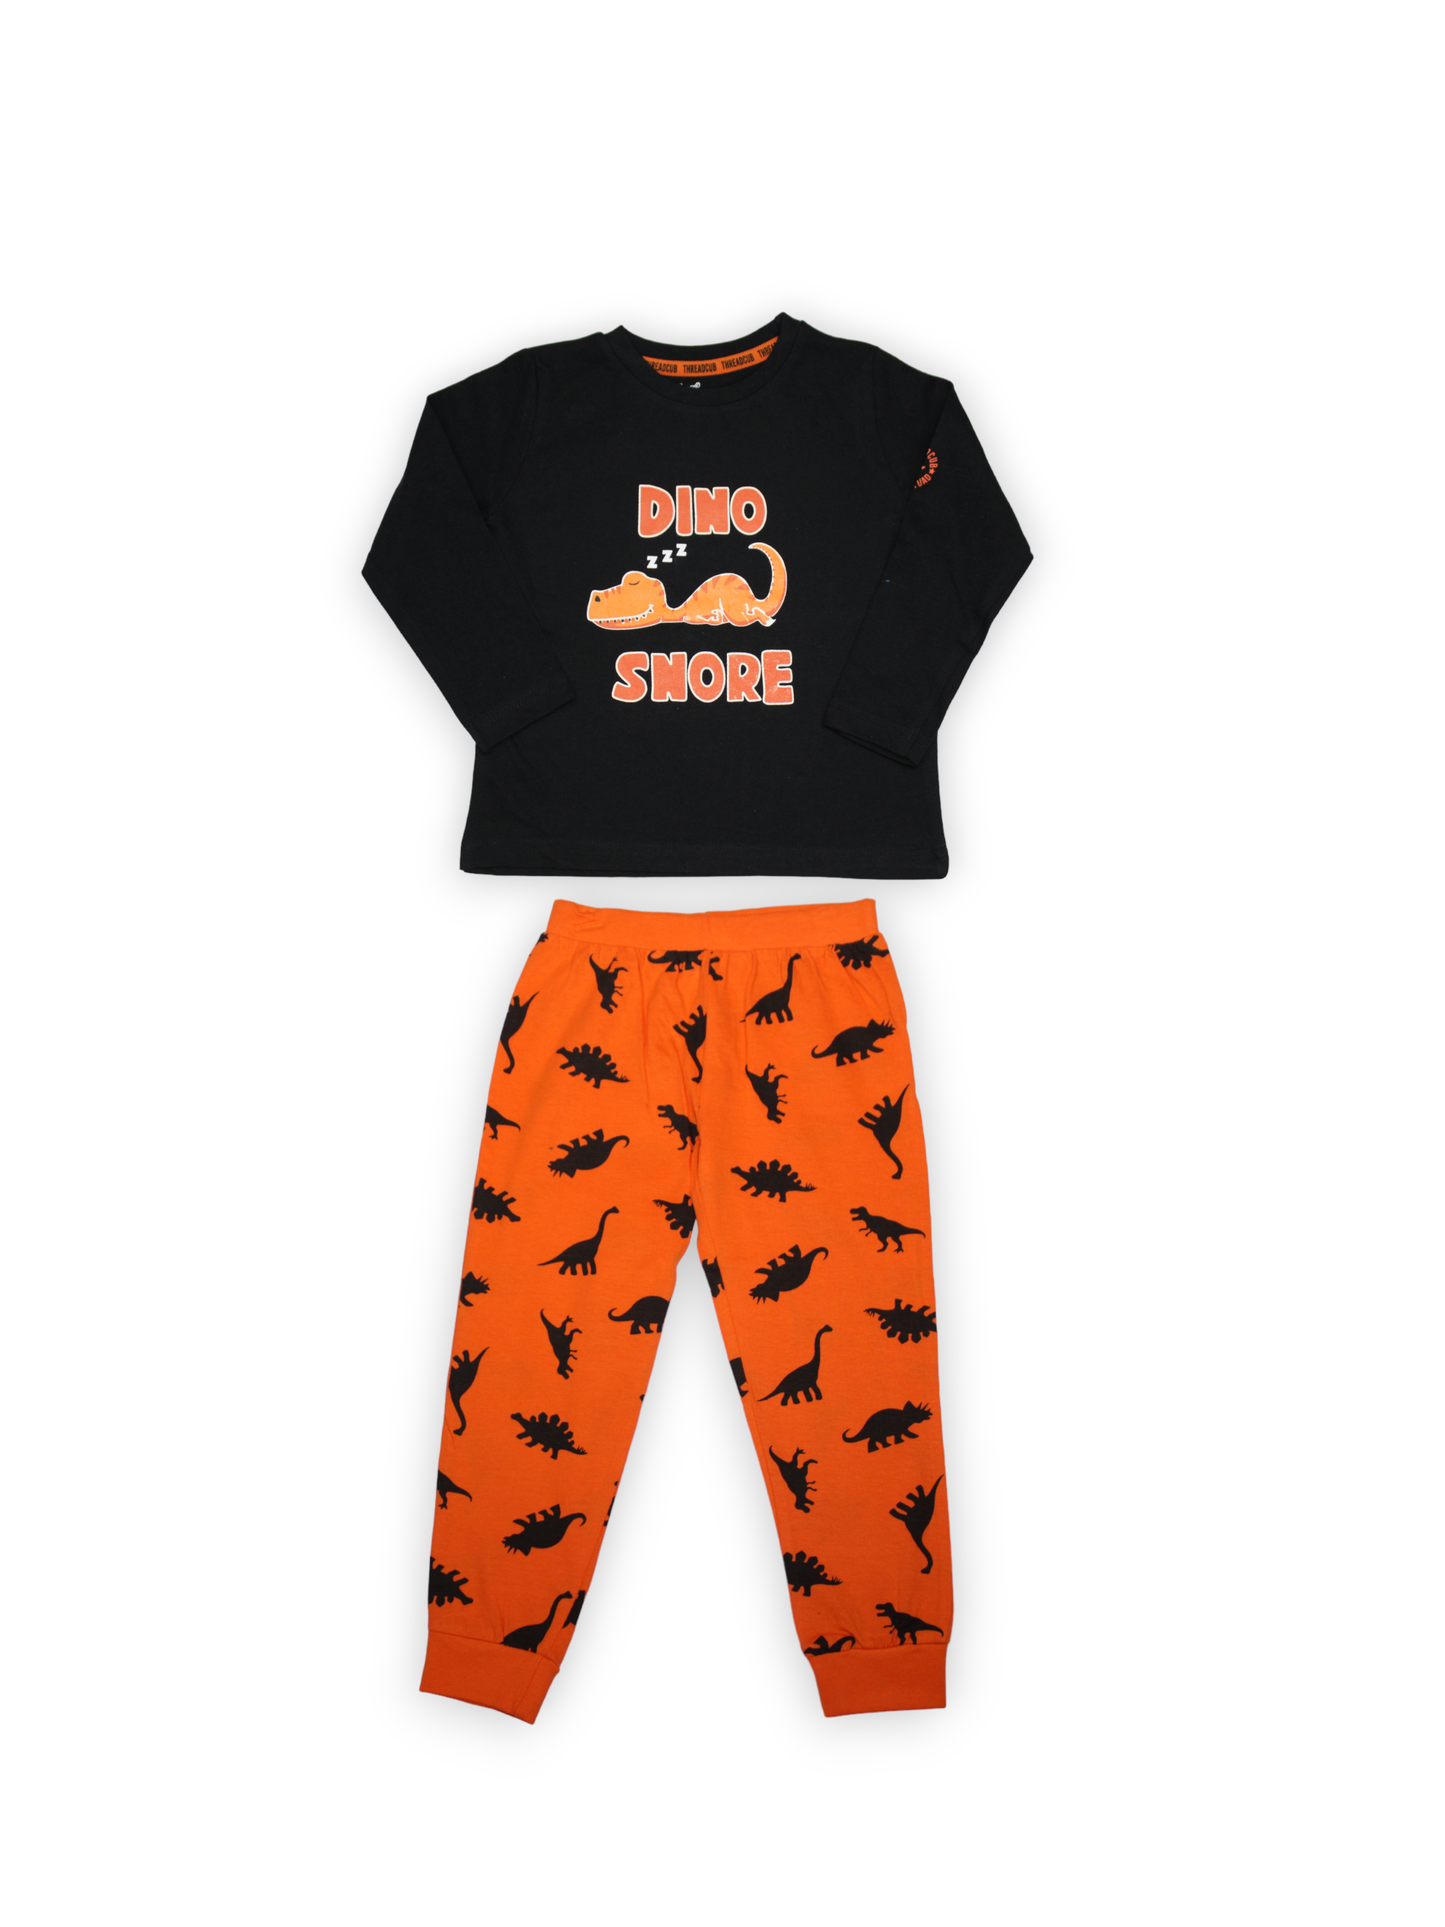 Snore Dino Pyjama T-Shirt Set ( Pack of 1 )